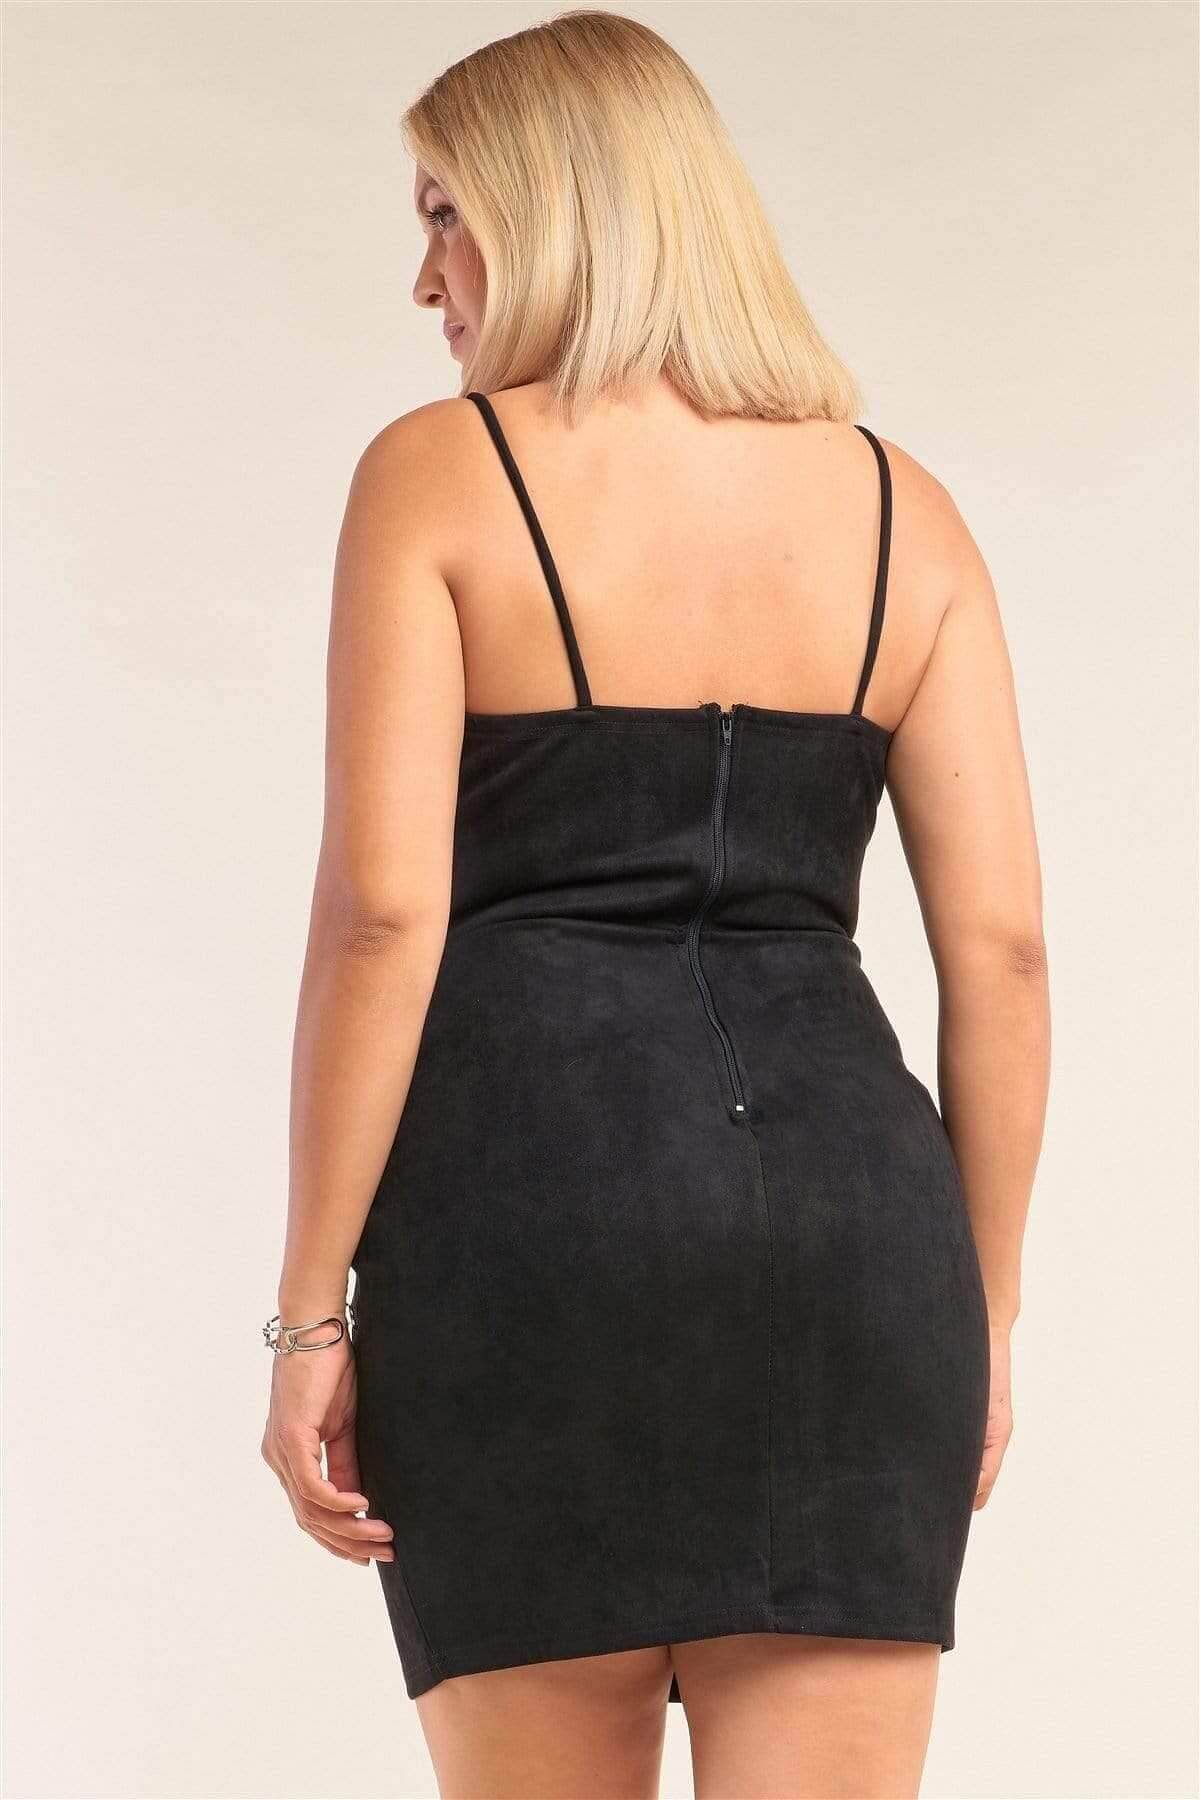 Black Plus Size Spaghetti Strap Suede Mini Dress - Shopping Therapy, LLC Dress